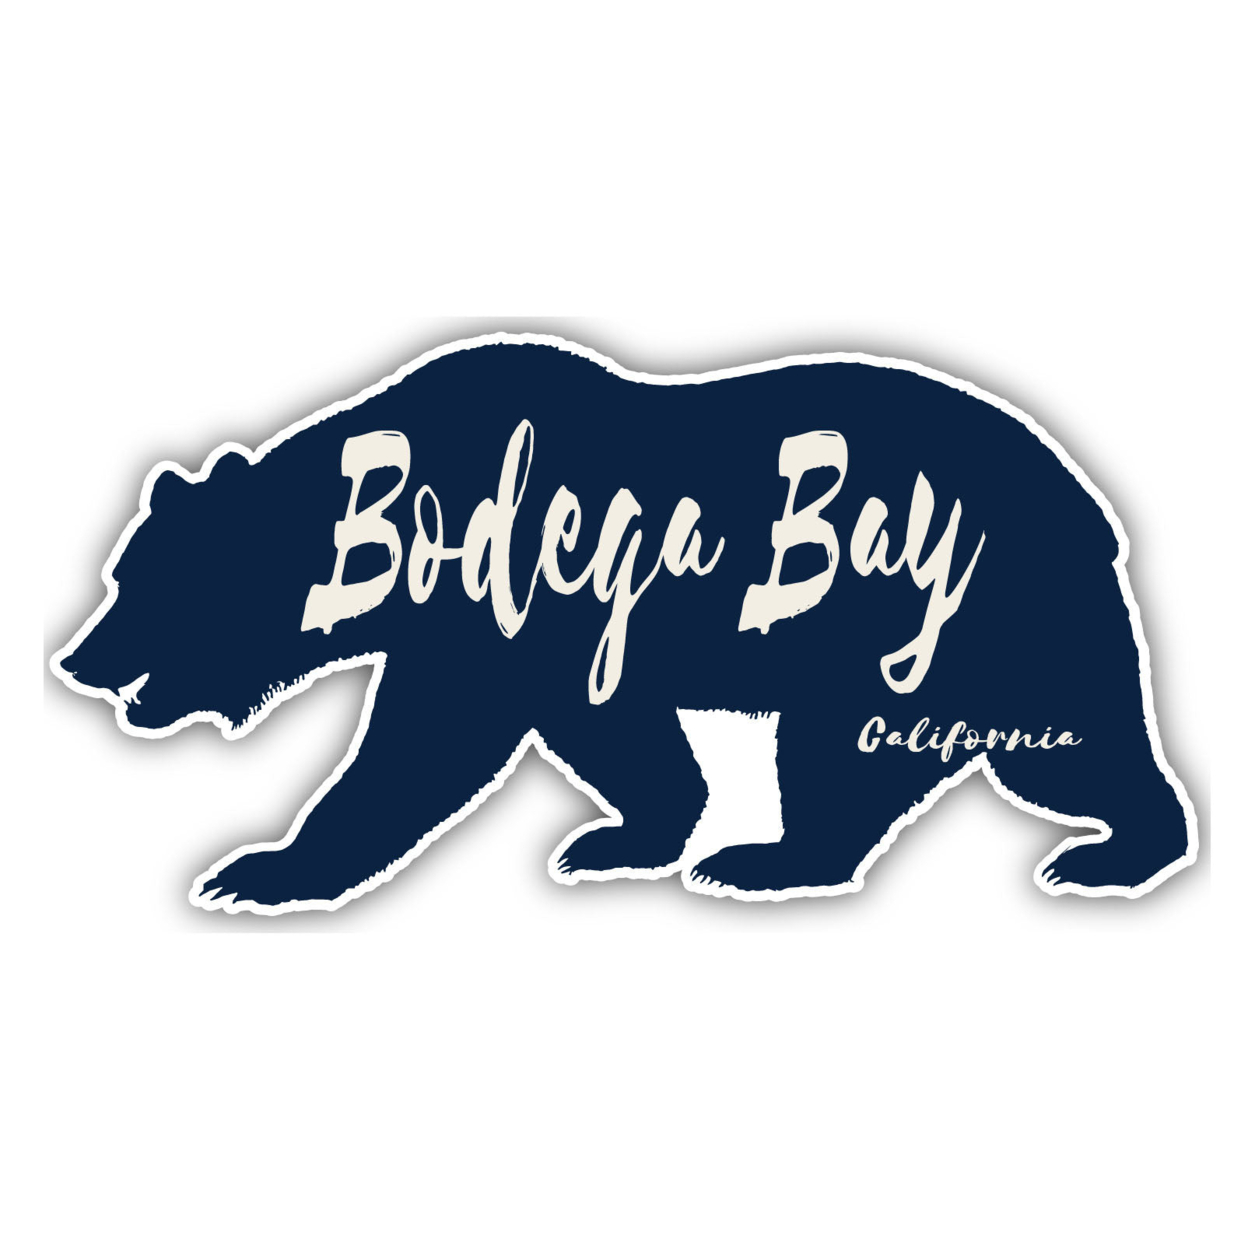 Bodega Bay California Souvenir Decorative Stickers (Choose Theme And Size) - Single Unit, 6-Inch, Tent